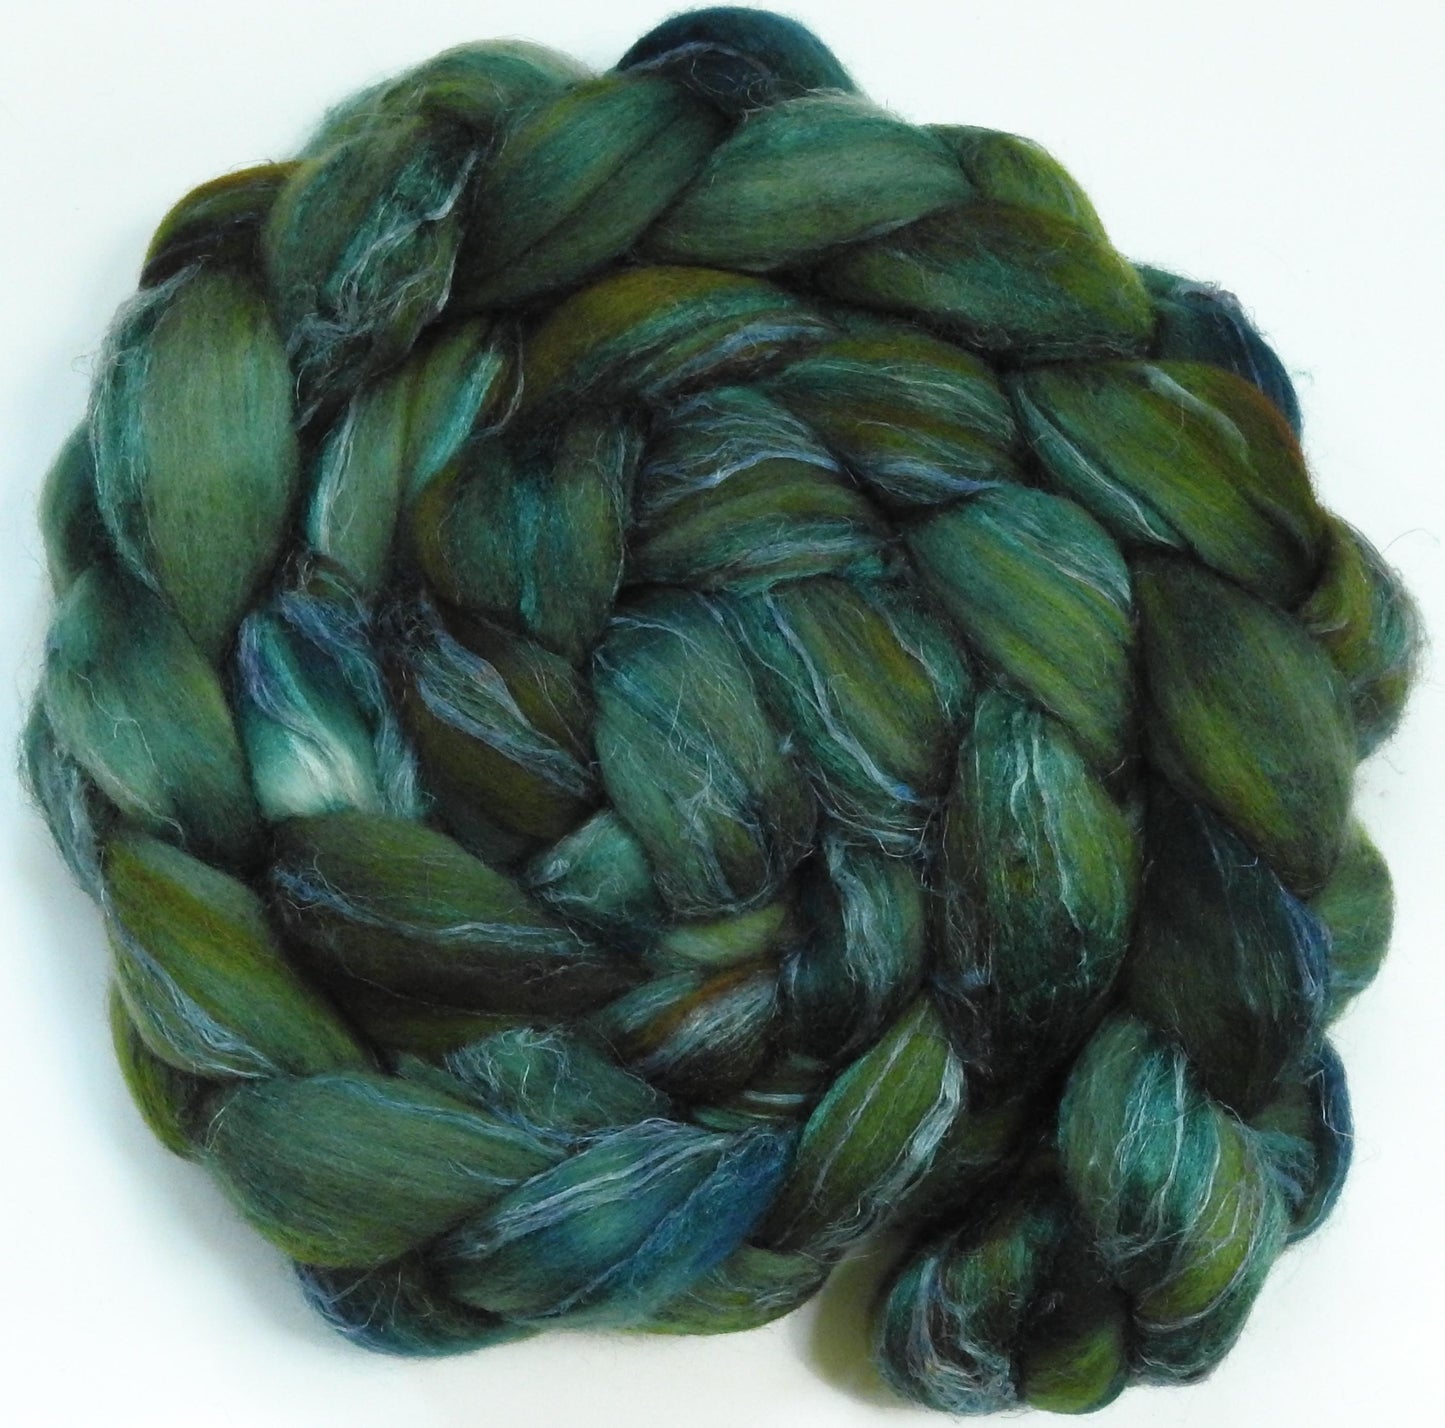 Courgette (6.2 oz) - Merino/ Tussah Silk/ Natural Flax (50/25/25)